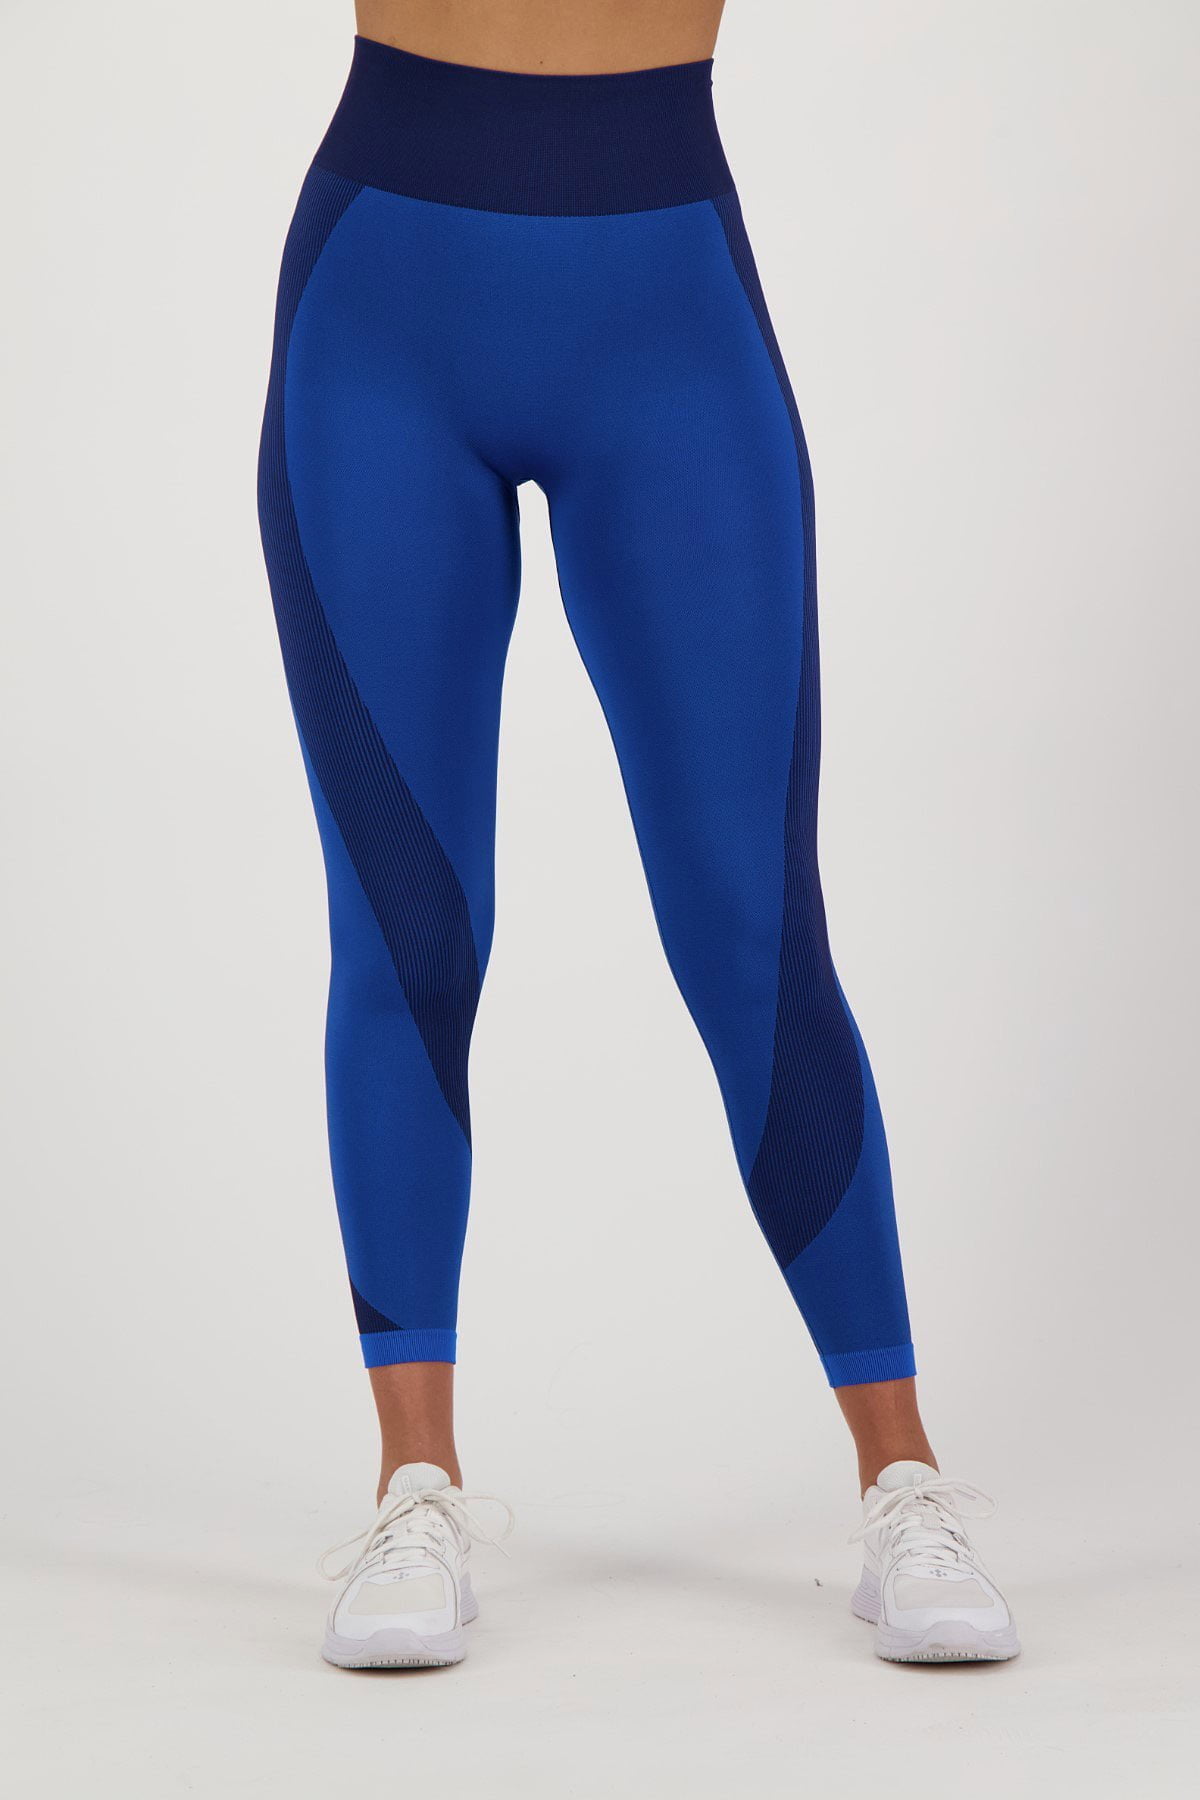 SeaSum SEASUM Women High Waisted Seamless Leggings Smile Contour Workout  Gym Yoga Pants Tights L